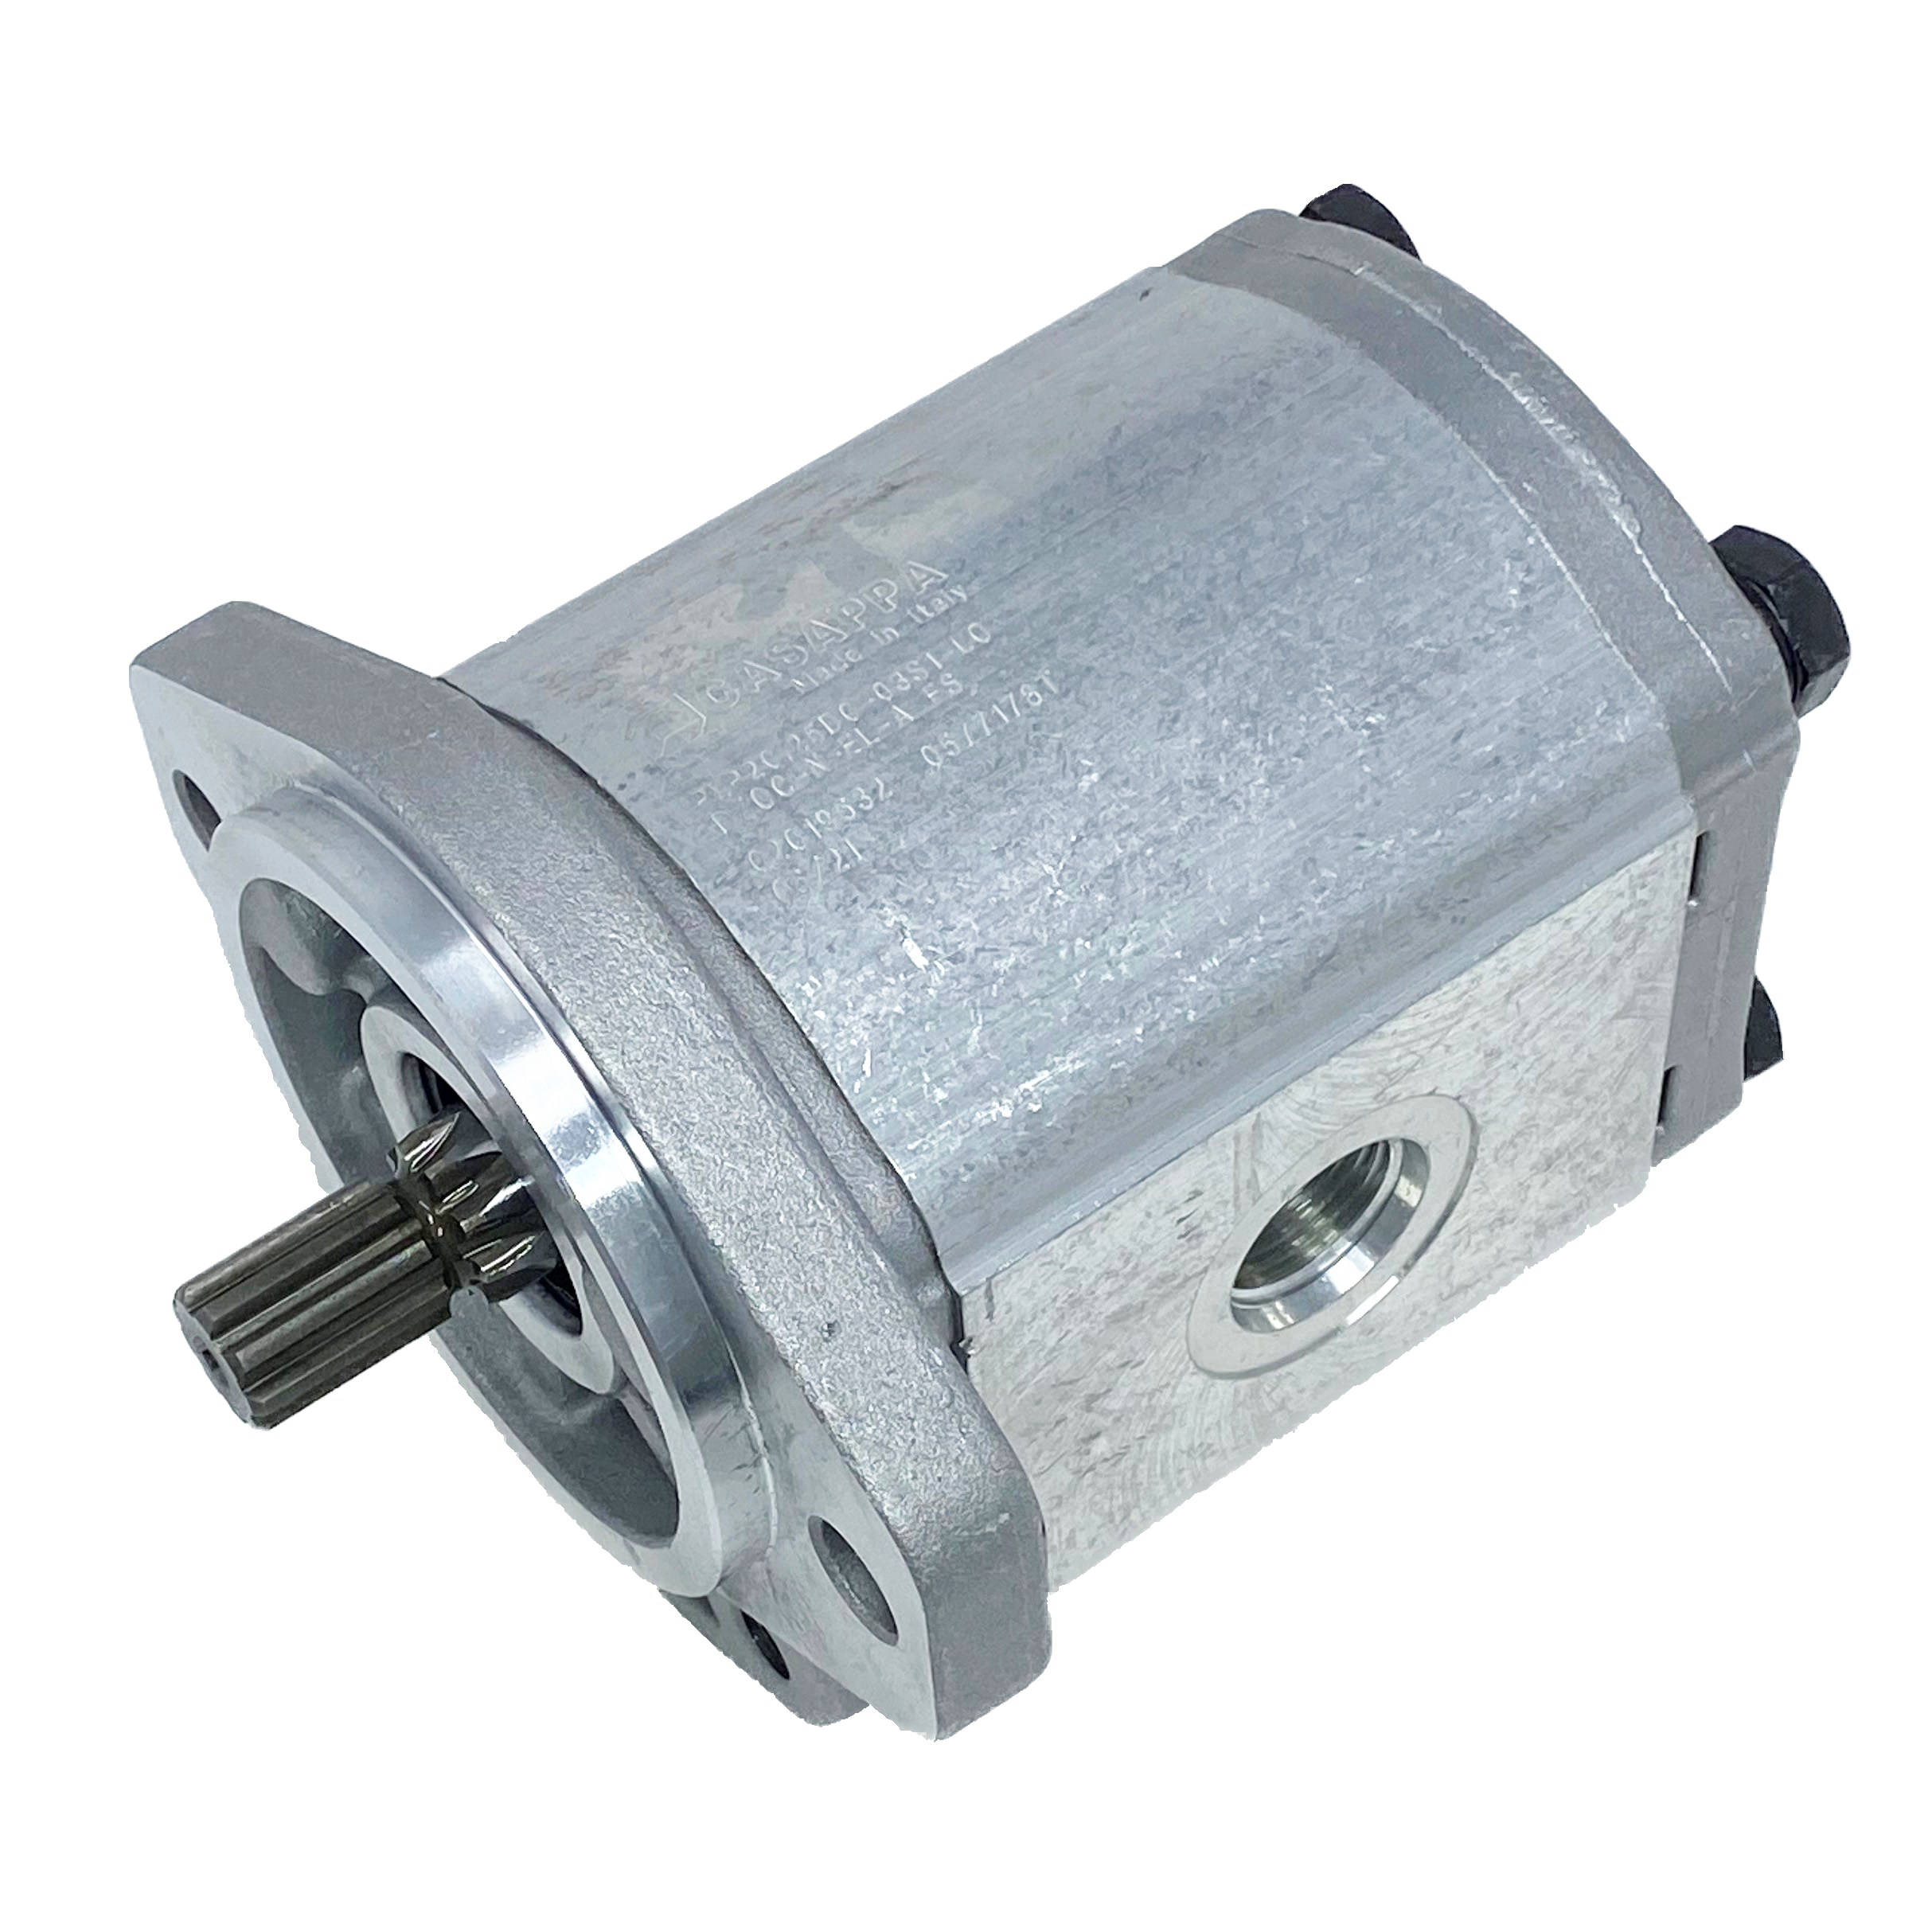 PHM20.31,5R0-07S9-LOC/OG-N-EL : Casappa Polaris Gear Motor, 33.03cc, 2900psi Rated, 2500RPM, Reversible Rear External Drain, 11T 16/32dp Shaft, SAE A 2-Bolt Flange, 0.625 (5/8") #10 SAE Inlet, 1.25" #20 SAE Outlet, Cast Iron Body, Aluminum Flange